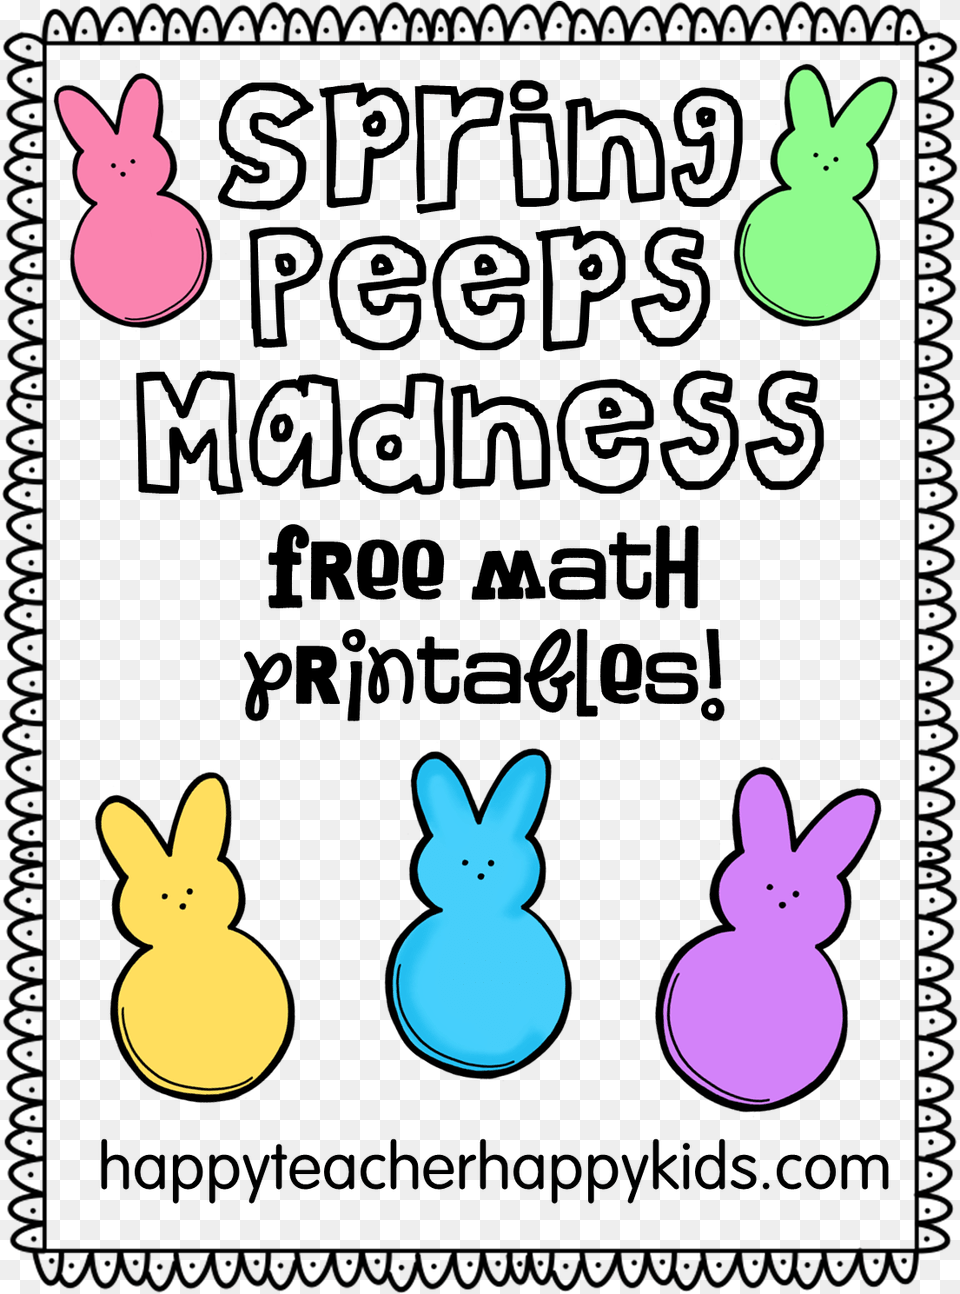 Spring Peeps Madness Cover Peeps Math, Animal, Mammal, Rabbit, Kangaroo Png Image